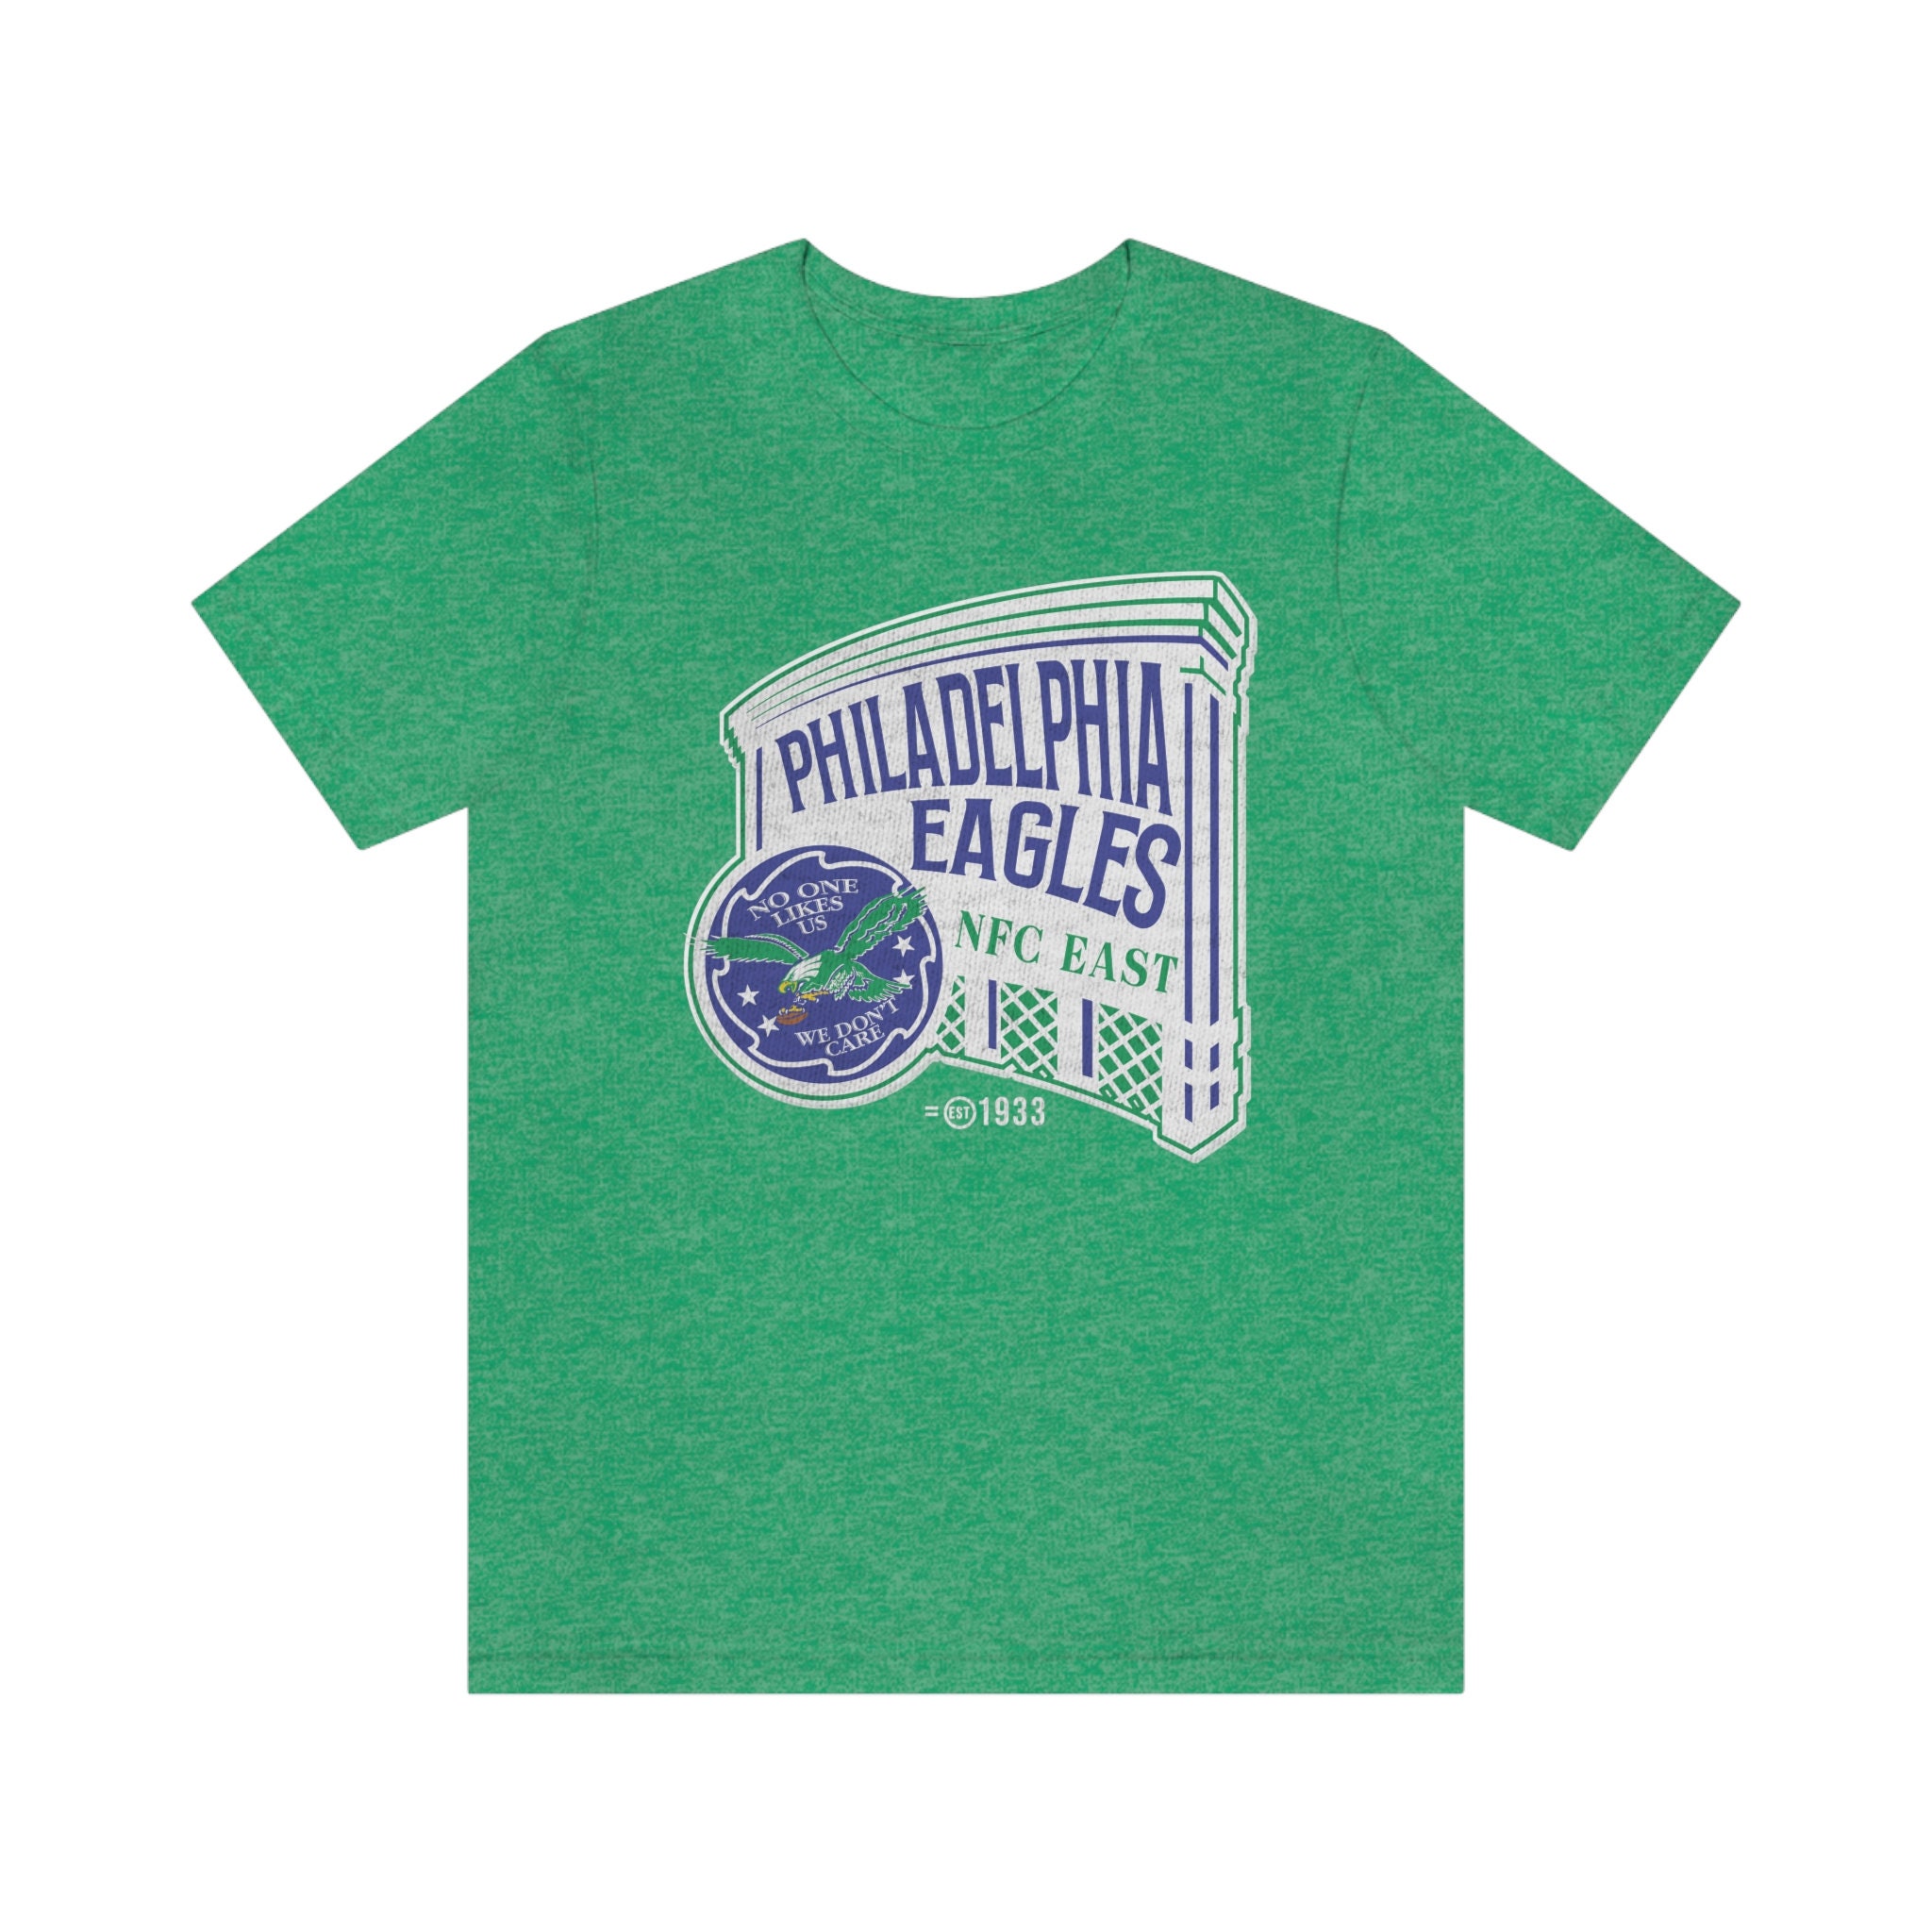 Discover Philadelphia Eagles Rolling Rock Beer Inspired T-Shirt